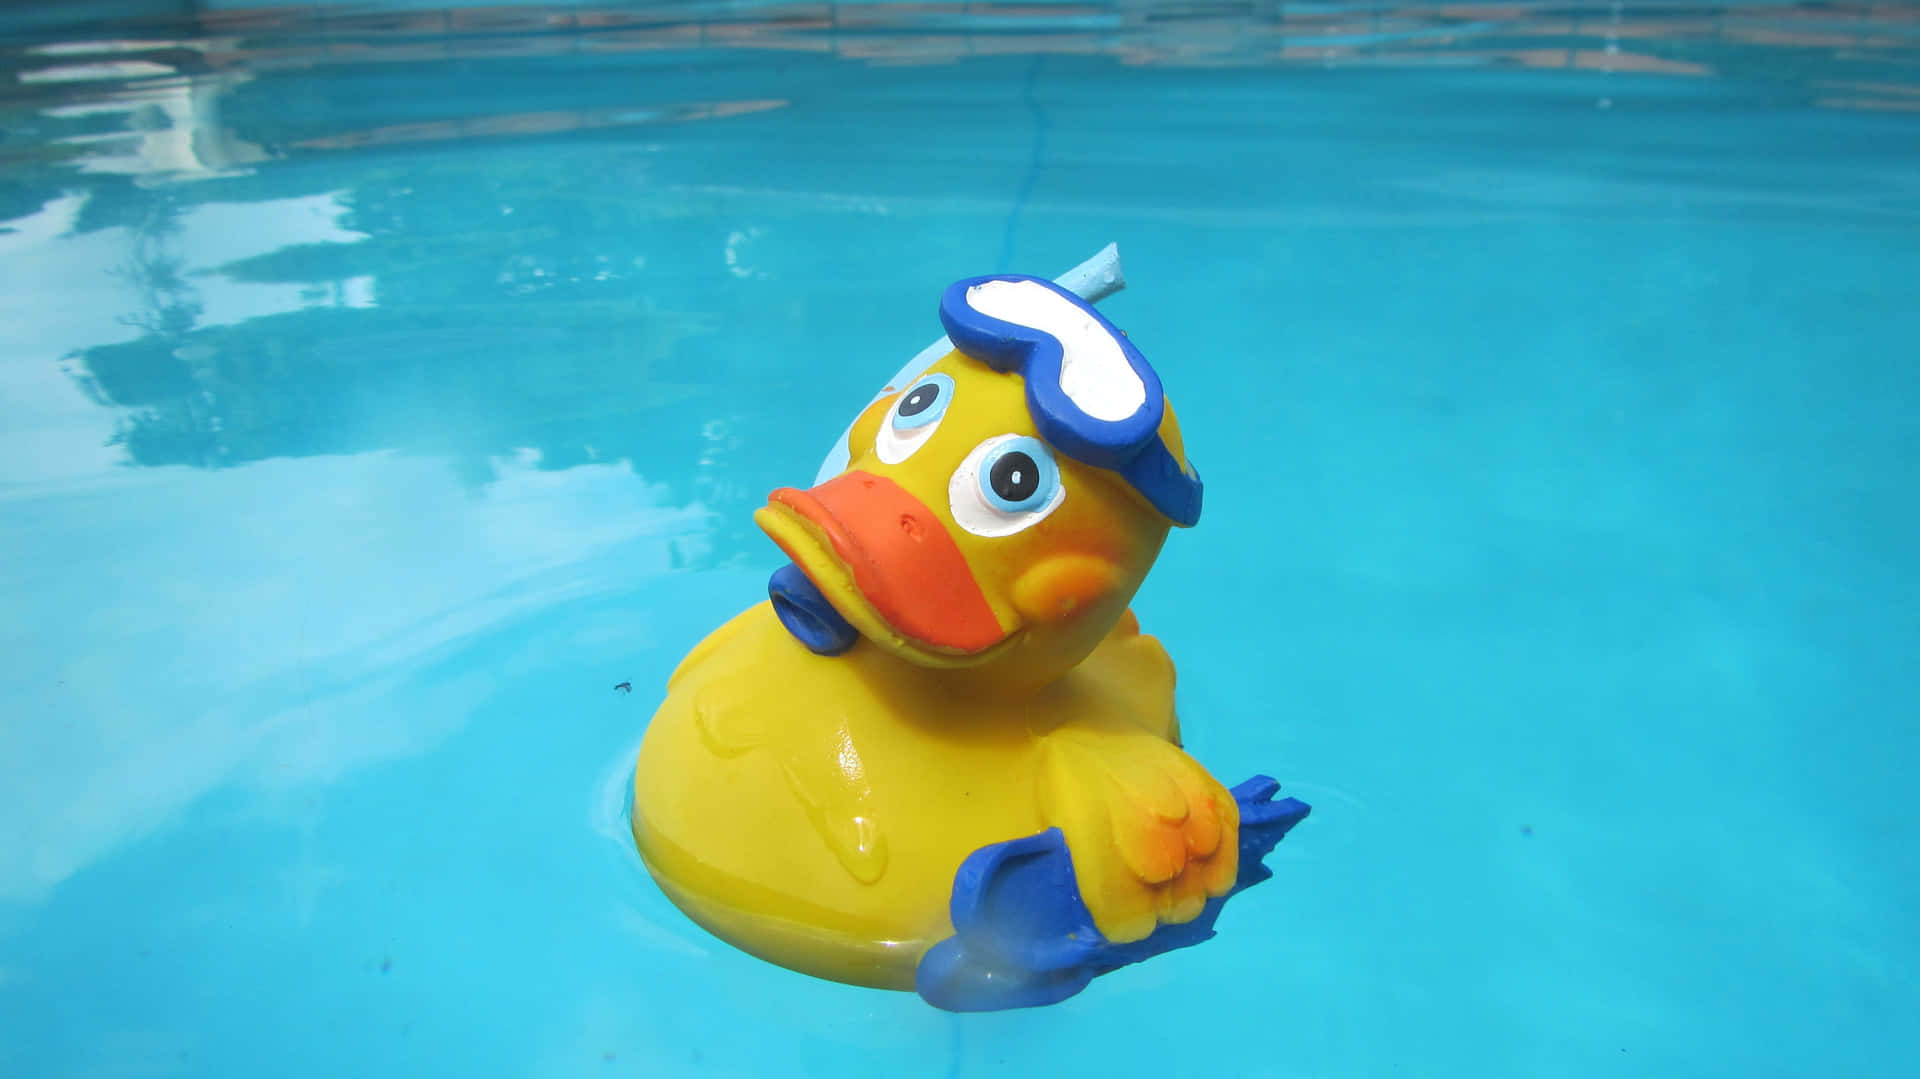 Swimming Rubber Ducky Toy.jpg Wallpaper